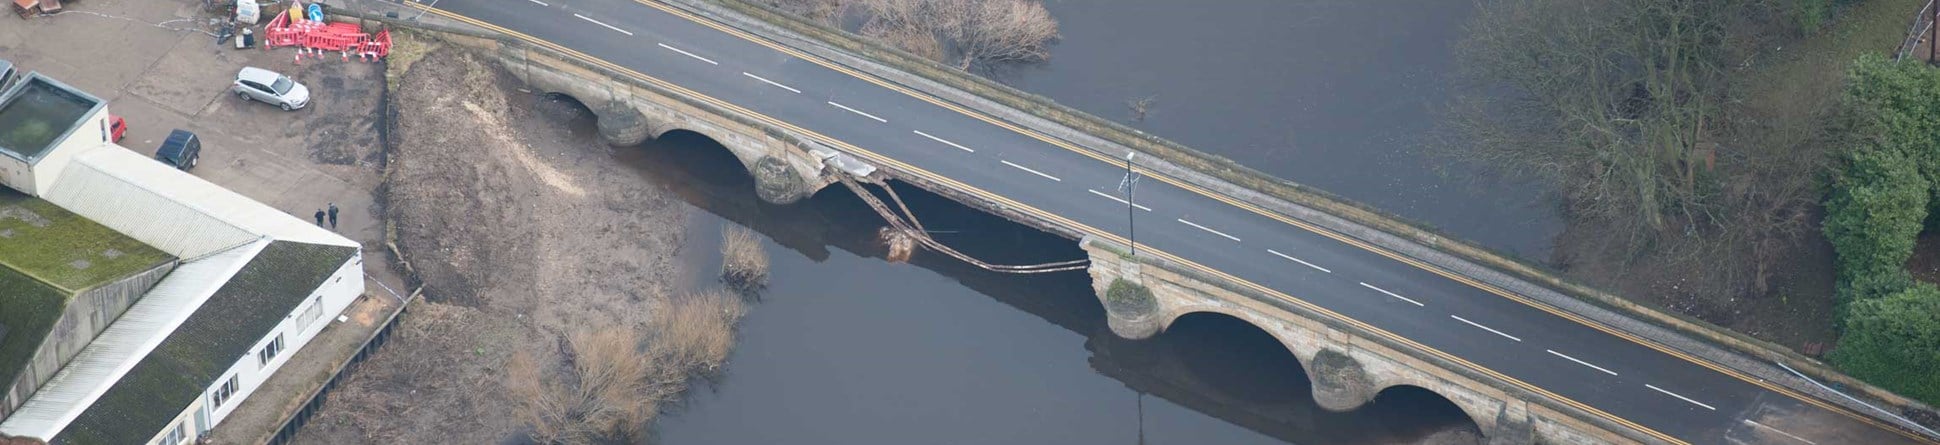 Aerial photograph of a damaged historic bridge.